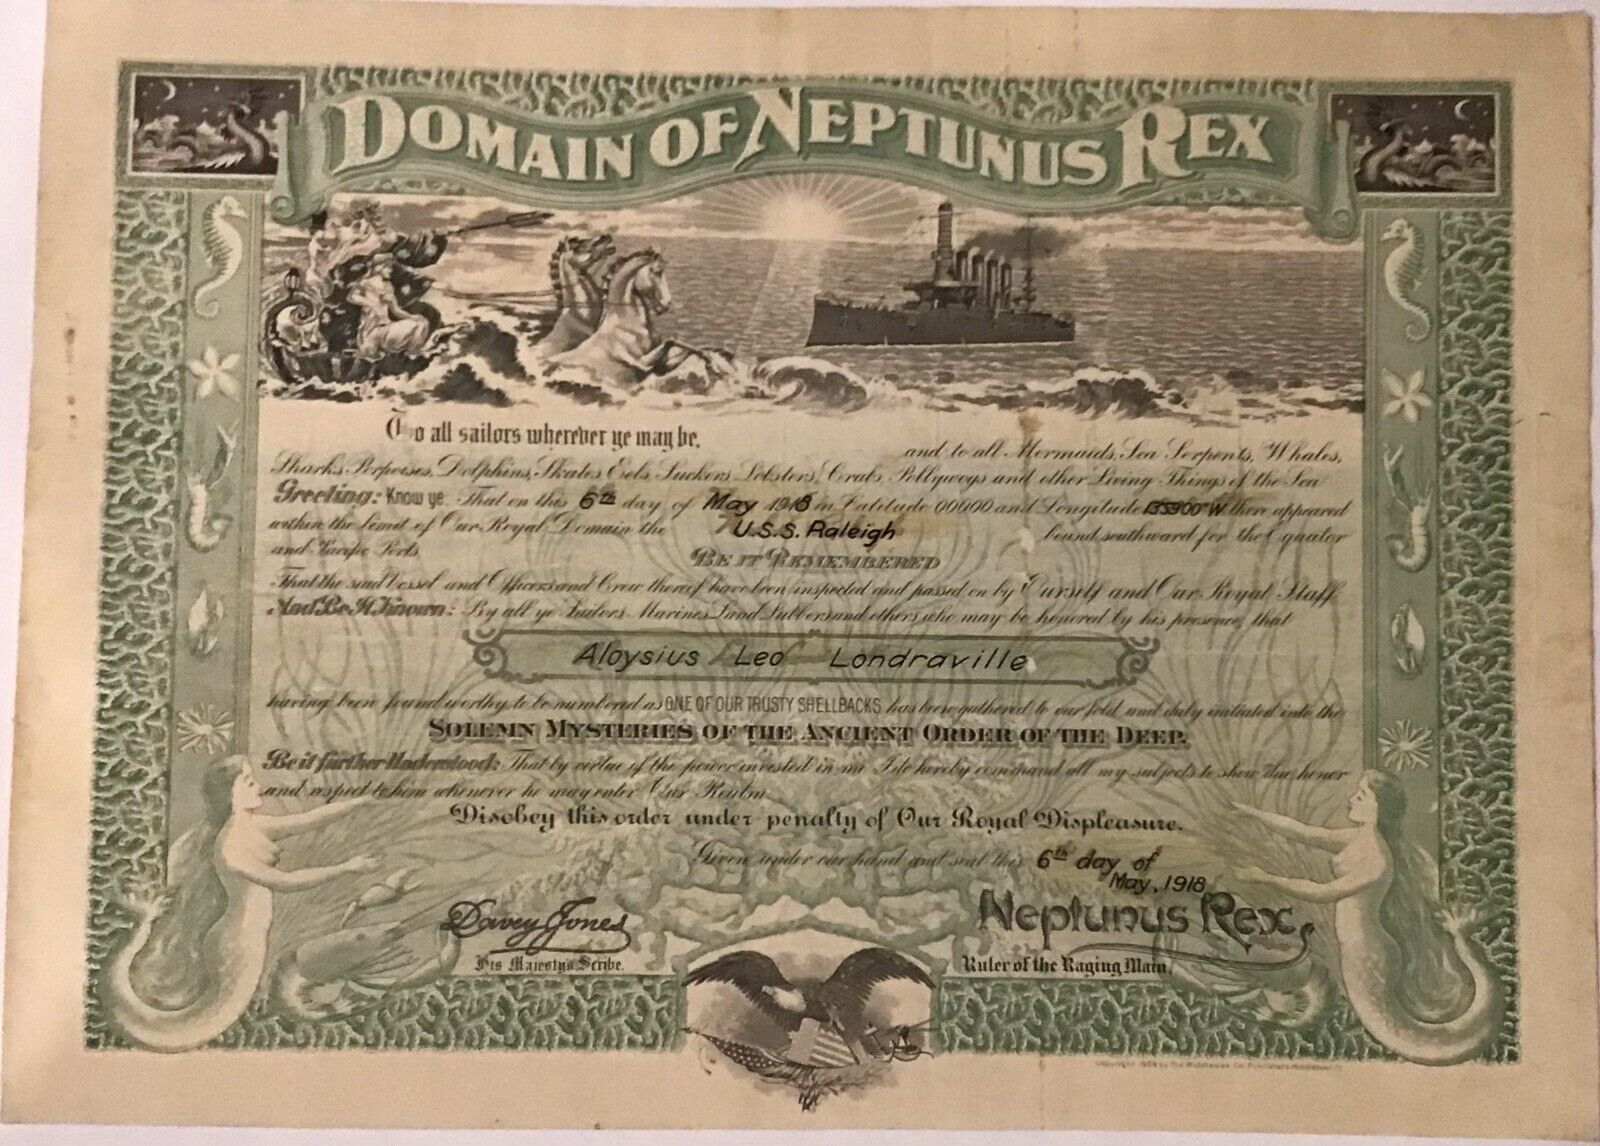 “Domain of Neptunus Rex” May 6, 1918 Certificate, U.S.S. Raleigh, WWI